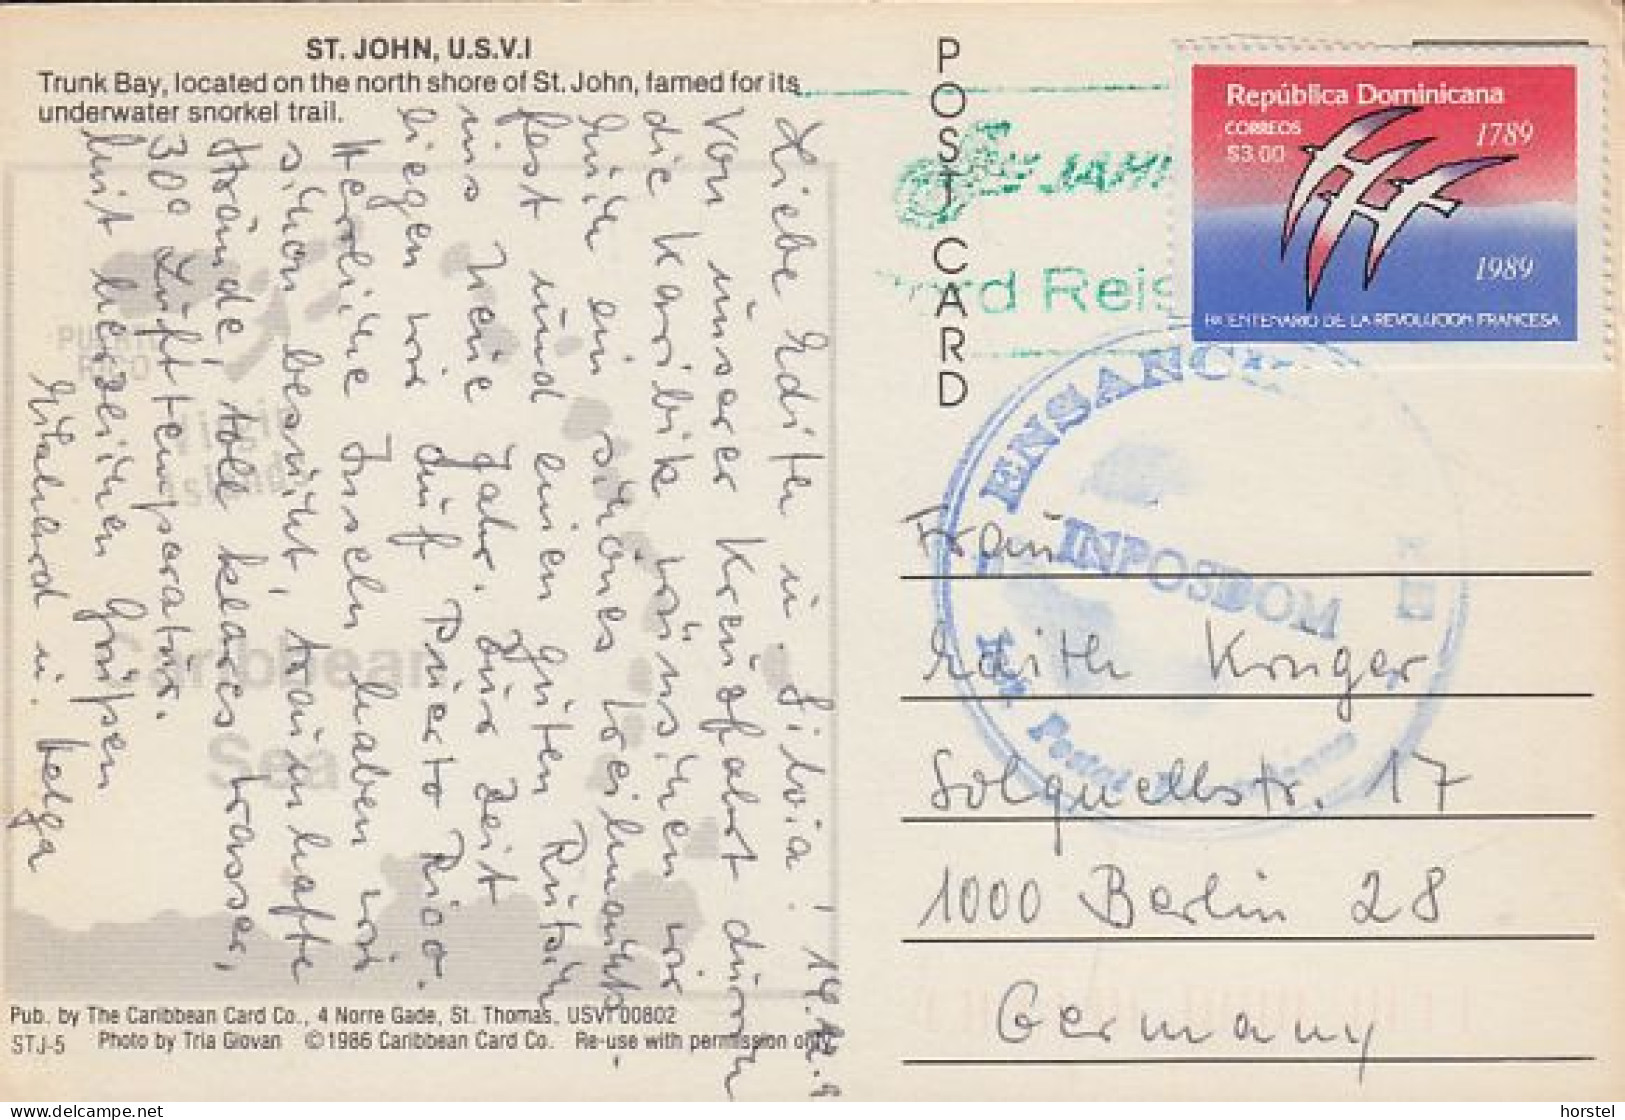 Jungferninseln - ST. John U.S.V.I - Trunk Bay - Nice Stamp "Rep.Dominicana" - Amerikaanse Maagdeneilanden